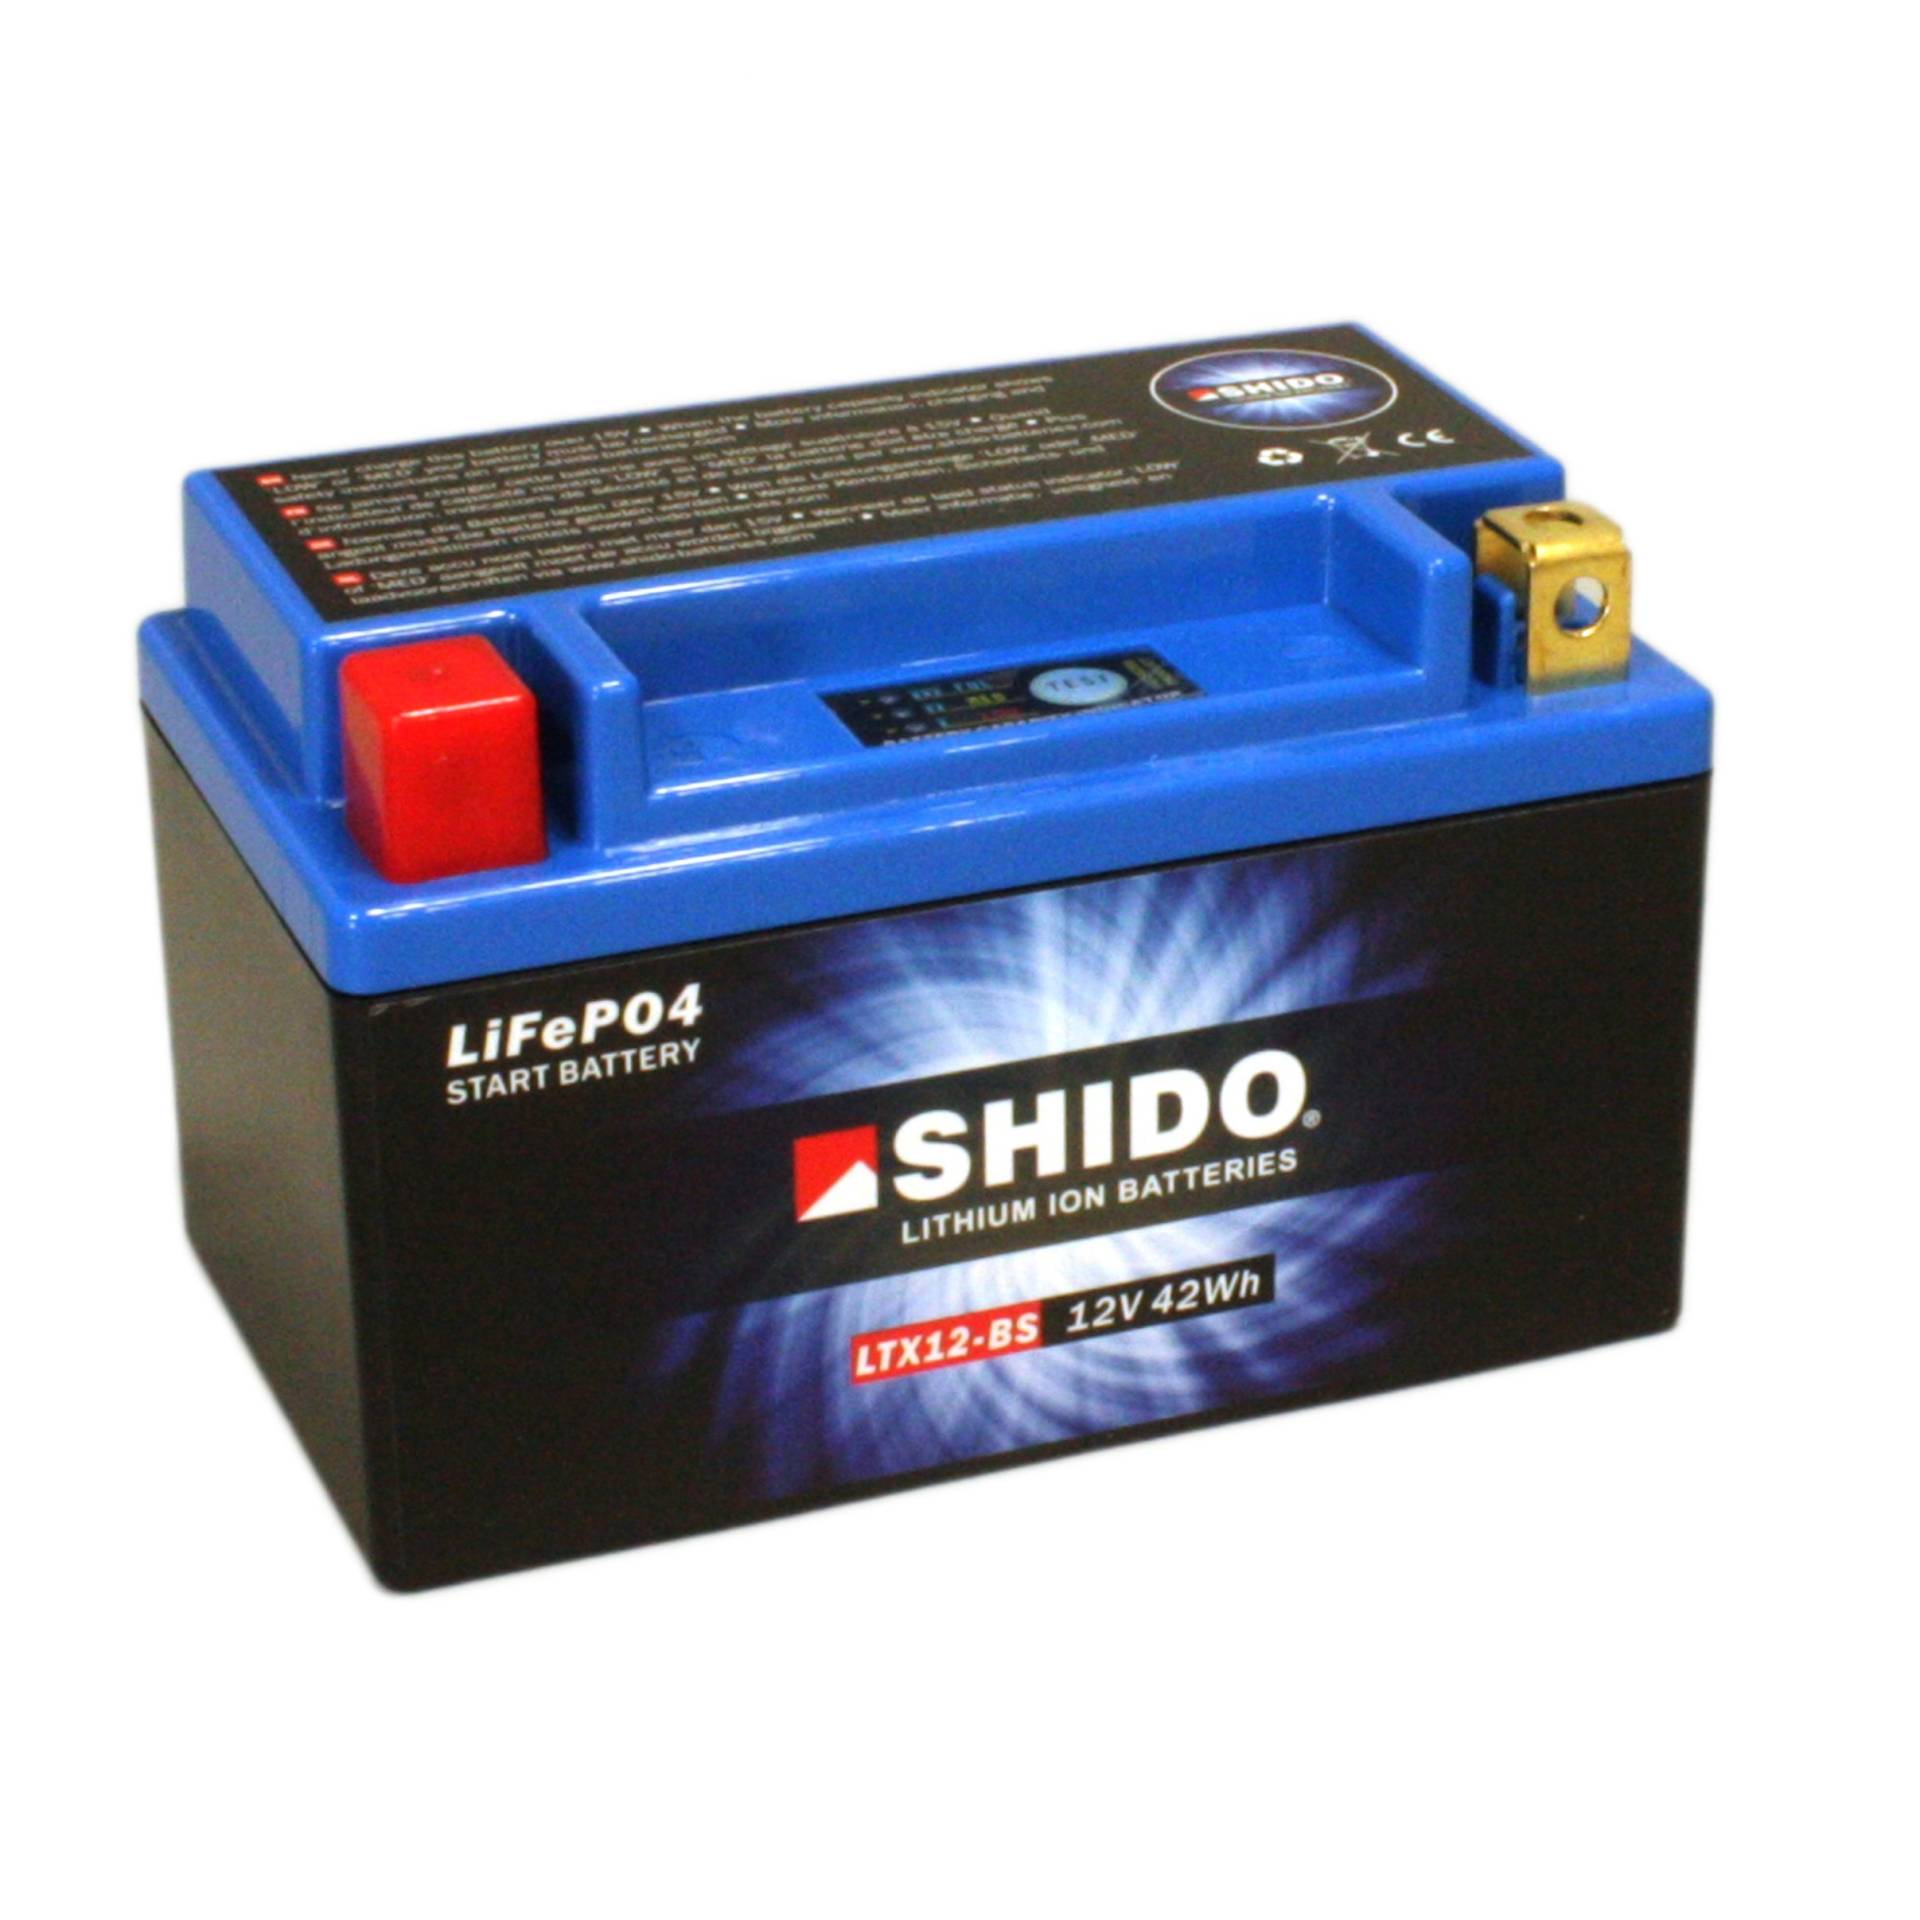 Batterie Shido Lithium LTX12-BS / YTX12-BS, 12V/10AH (Maße: 150x87x130) für Aprilia Pegaso 650 Strada Baujahr 2005 von Shido